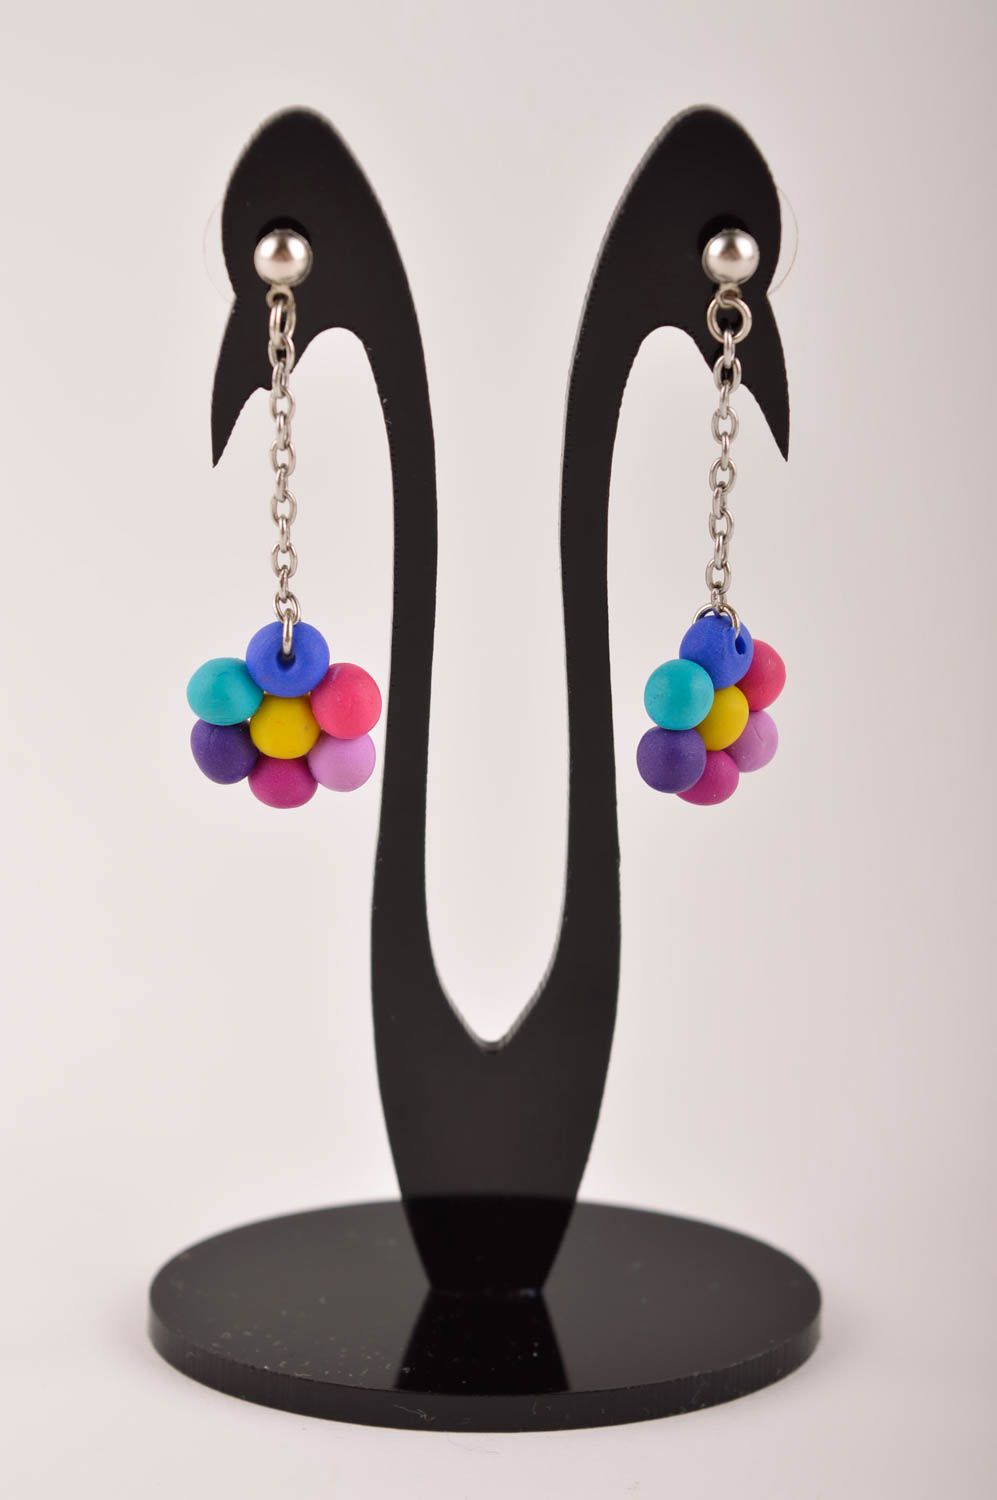 Handmade earrings designer earrings polymer clay jewelry unusual gift for women photo 2